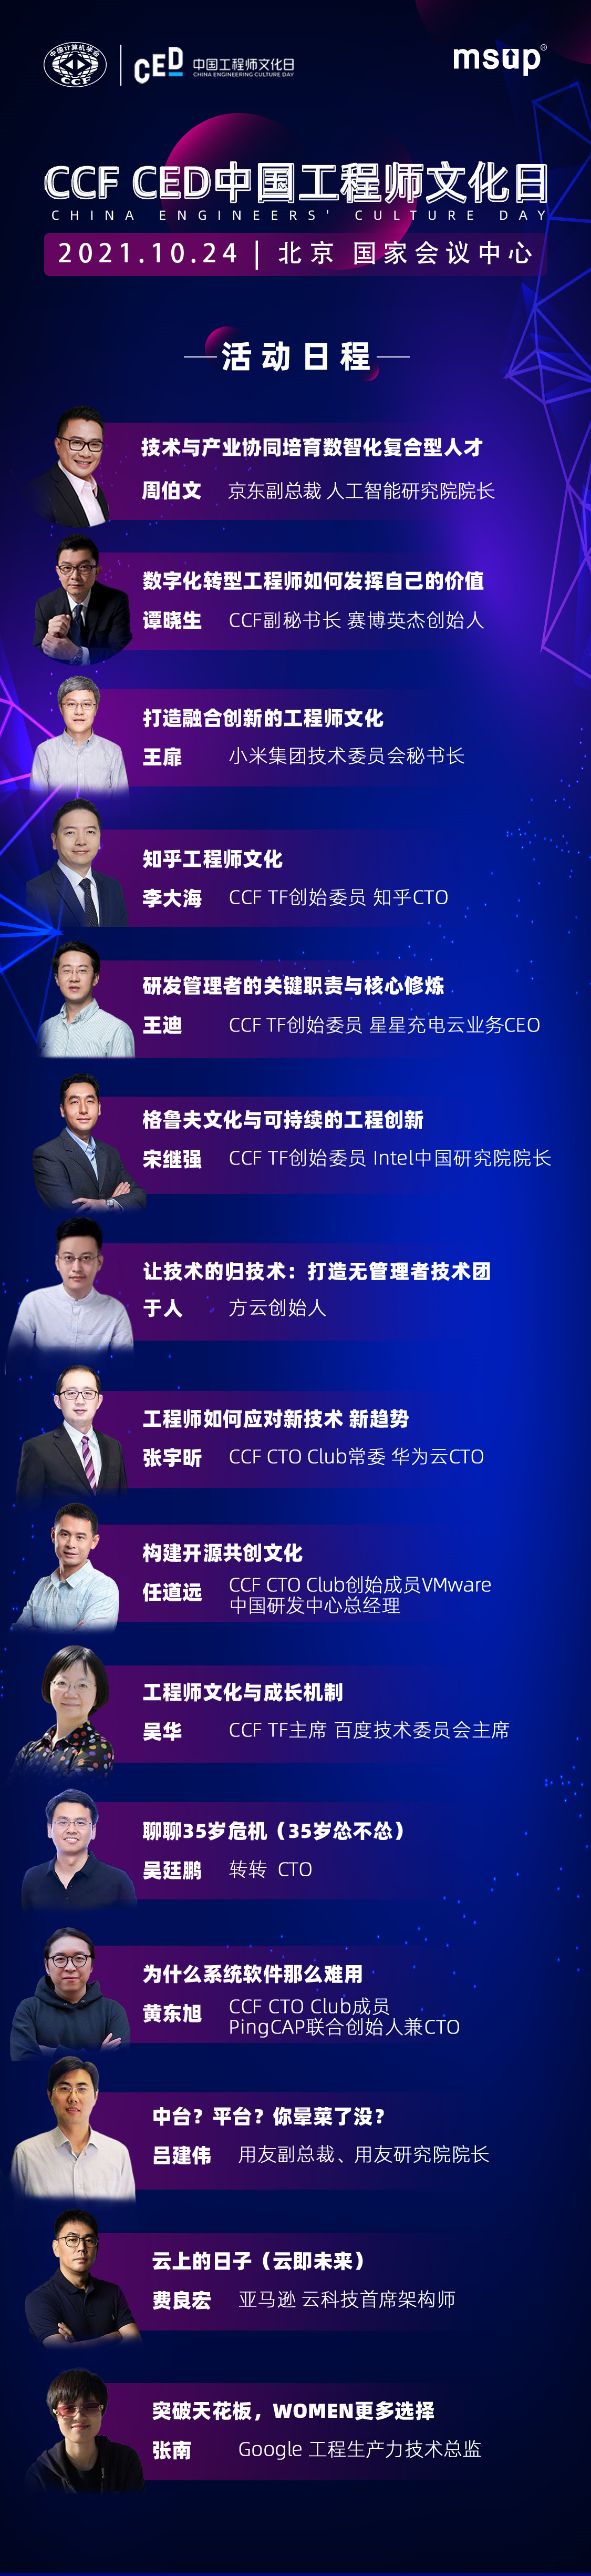 CCF CED中国工程师文化日---1024与你相约技术圈儿的脱口秀大会